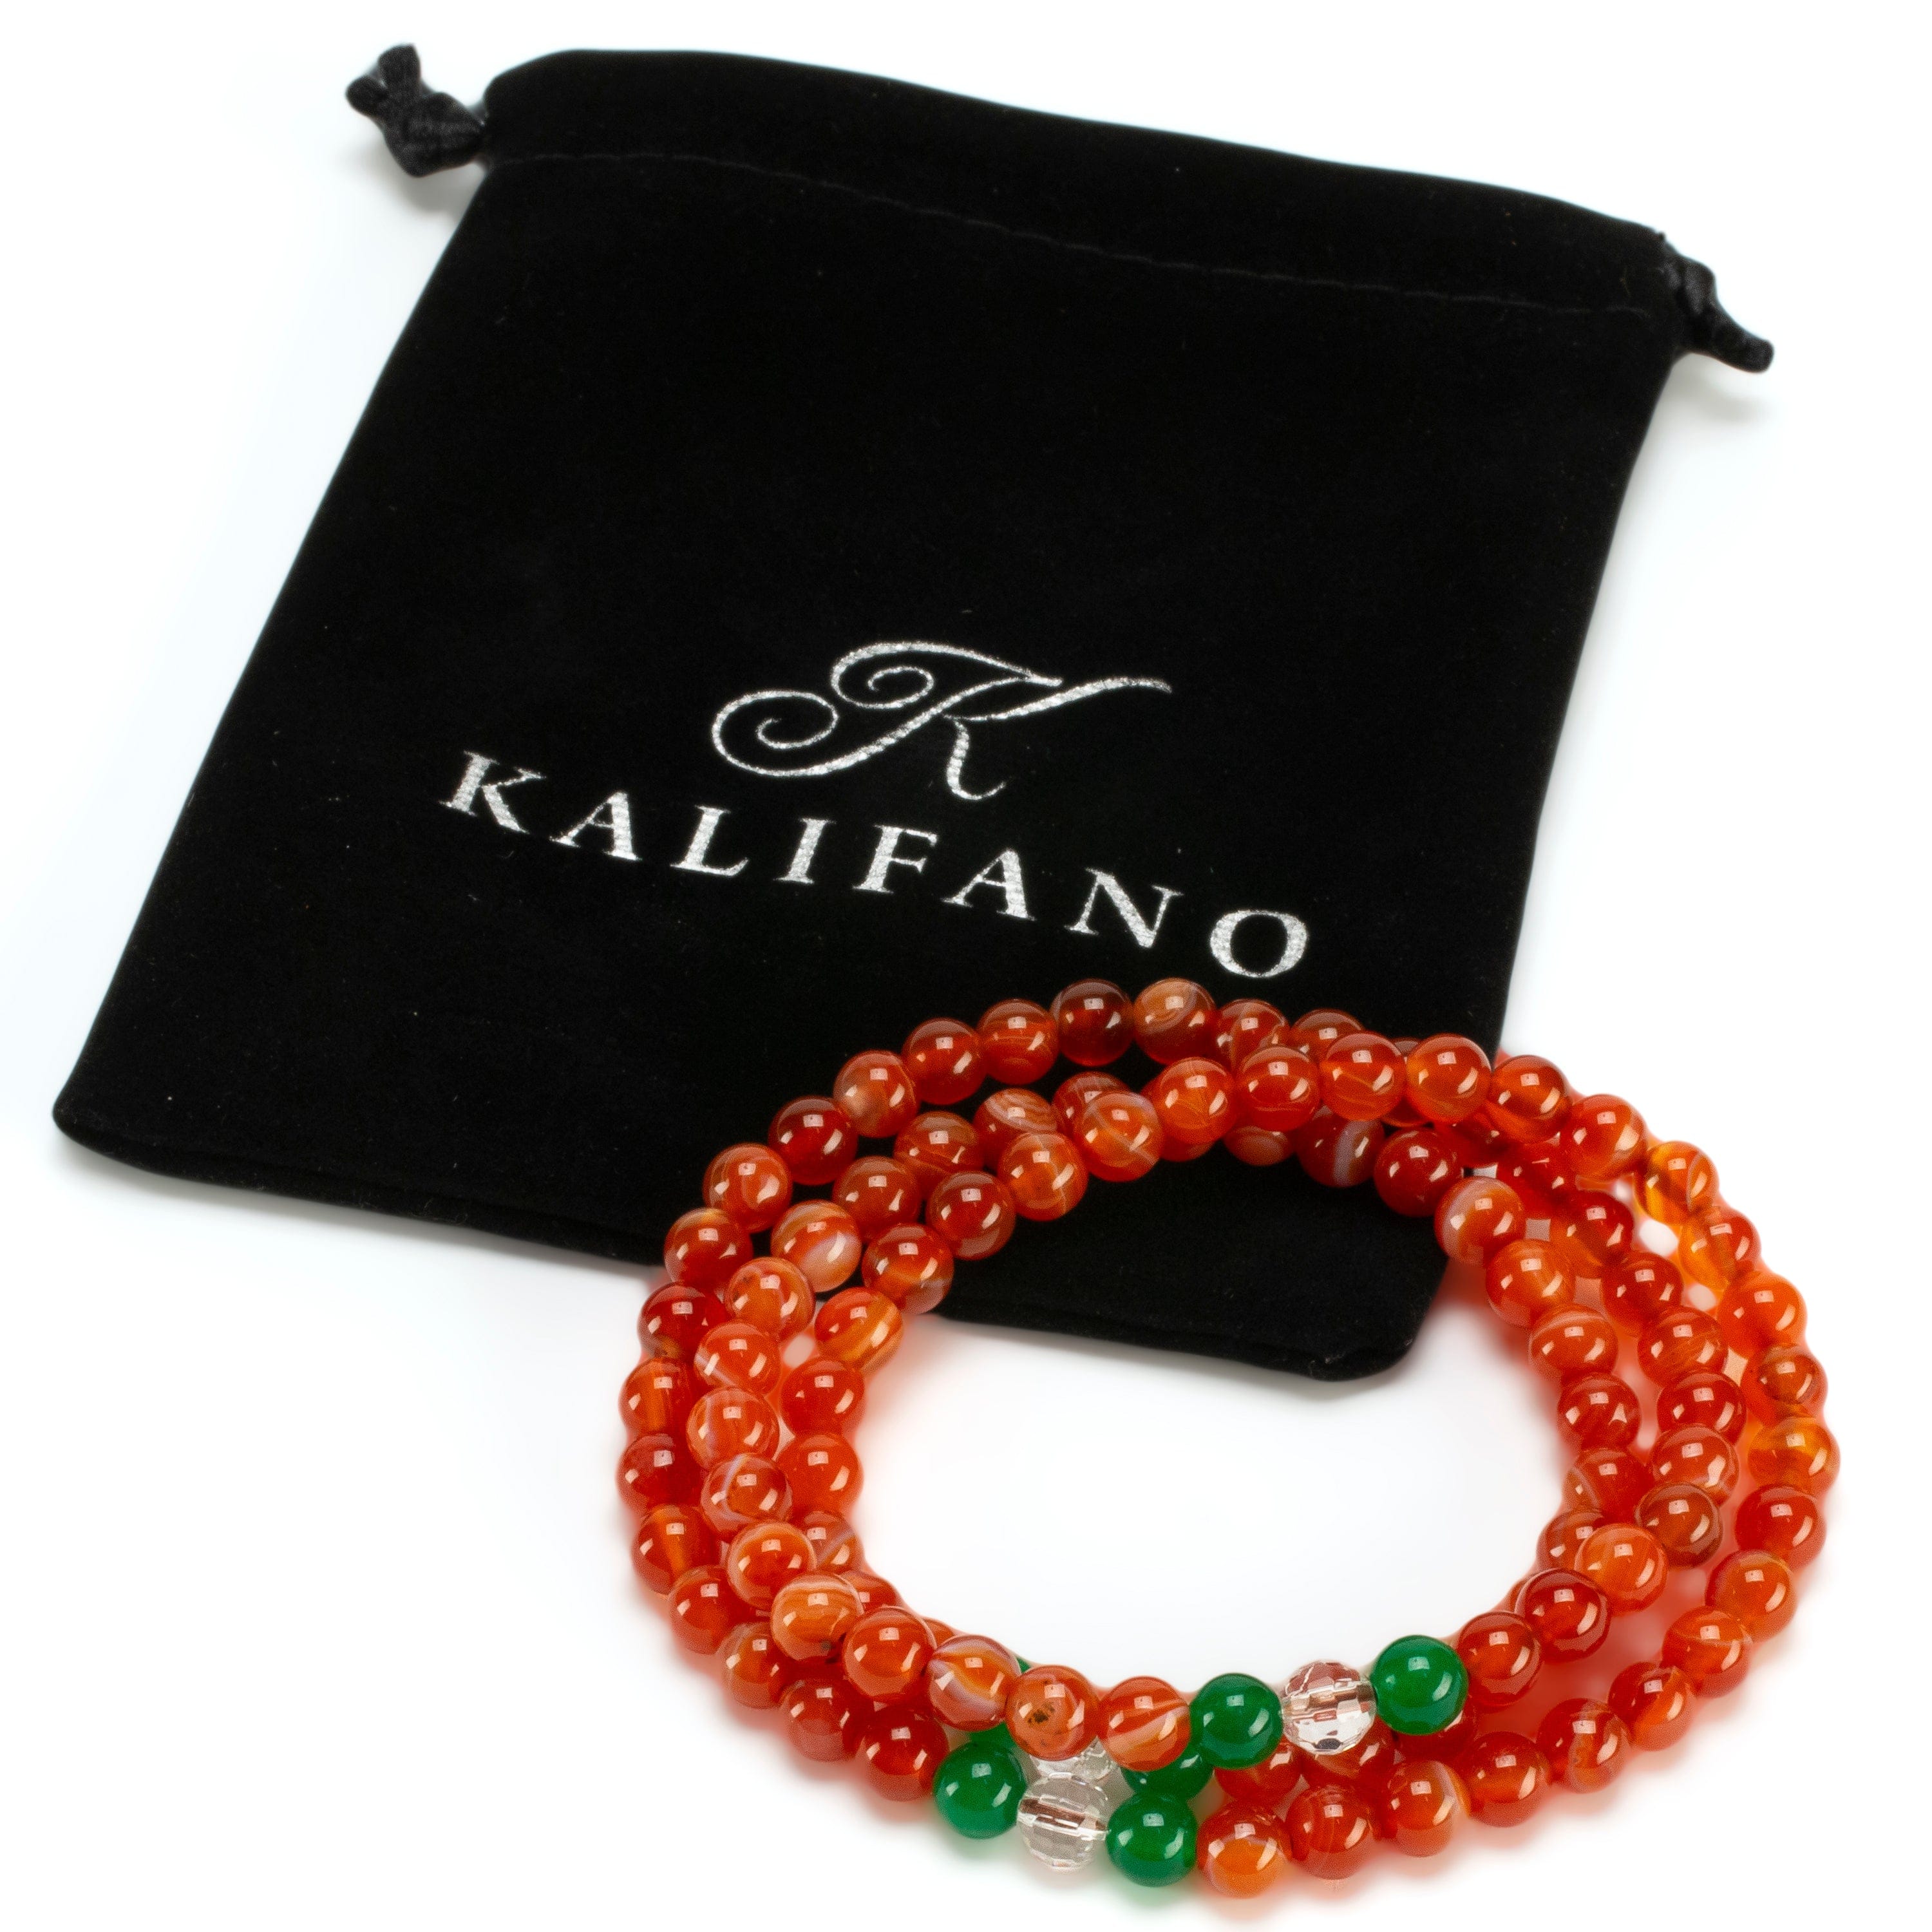 Kalifano Gemstone Bracelets Carnelian 6mm Beads with Aventurine & Quartz Accent Beads Triple Wrap Gemstone Elastic Bracelet WHITE-BGI3-074